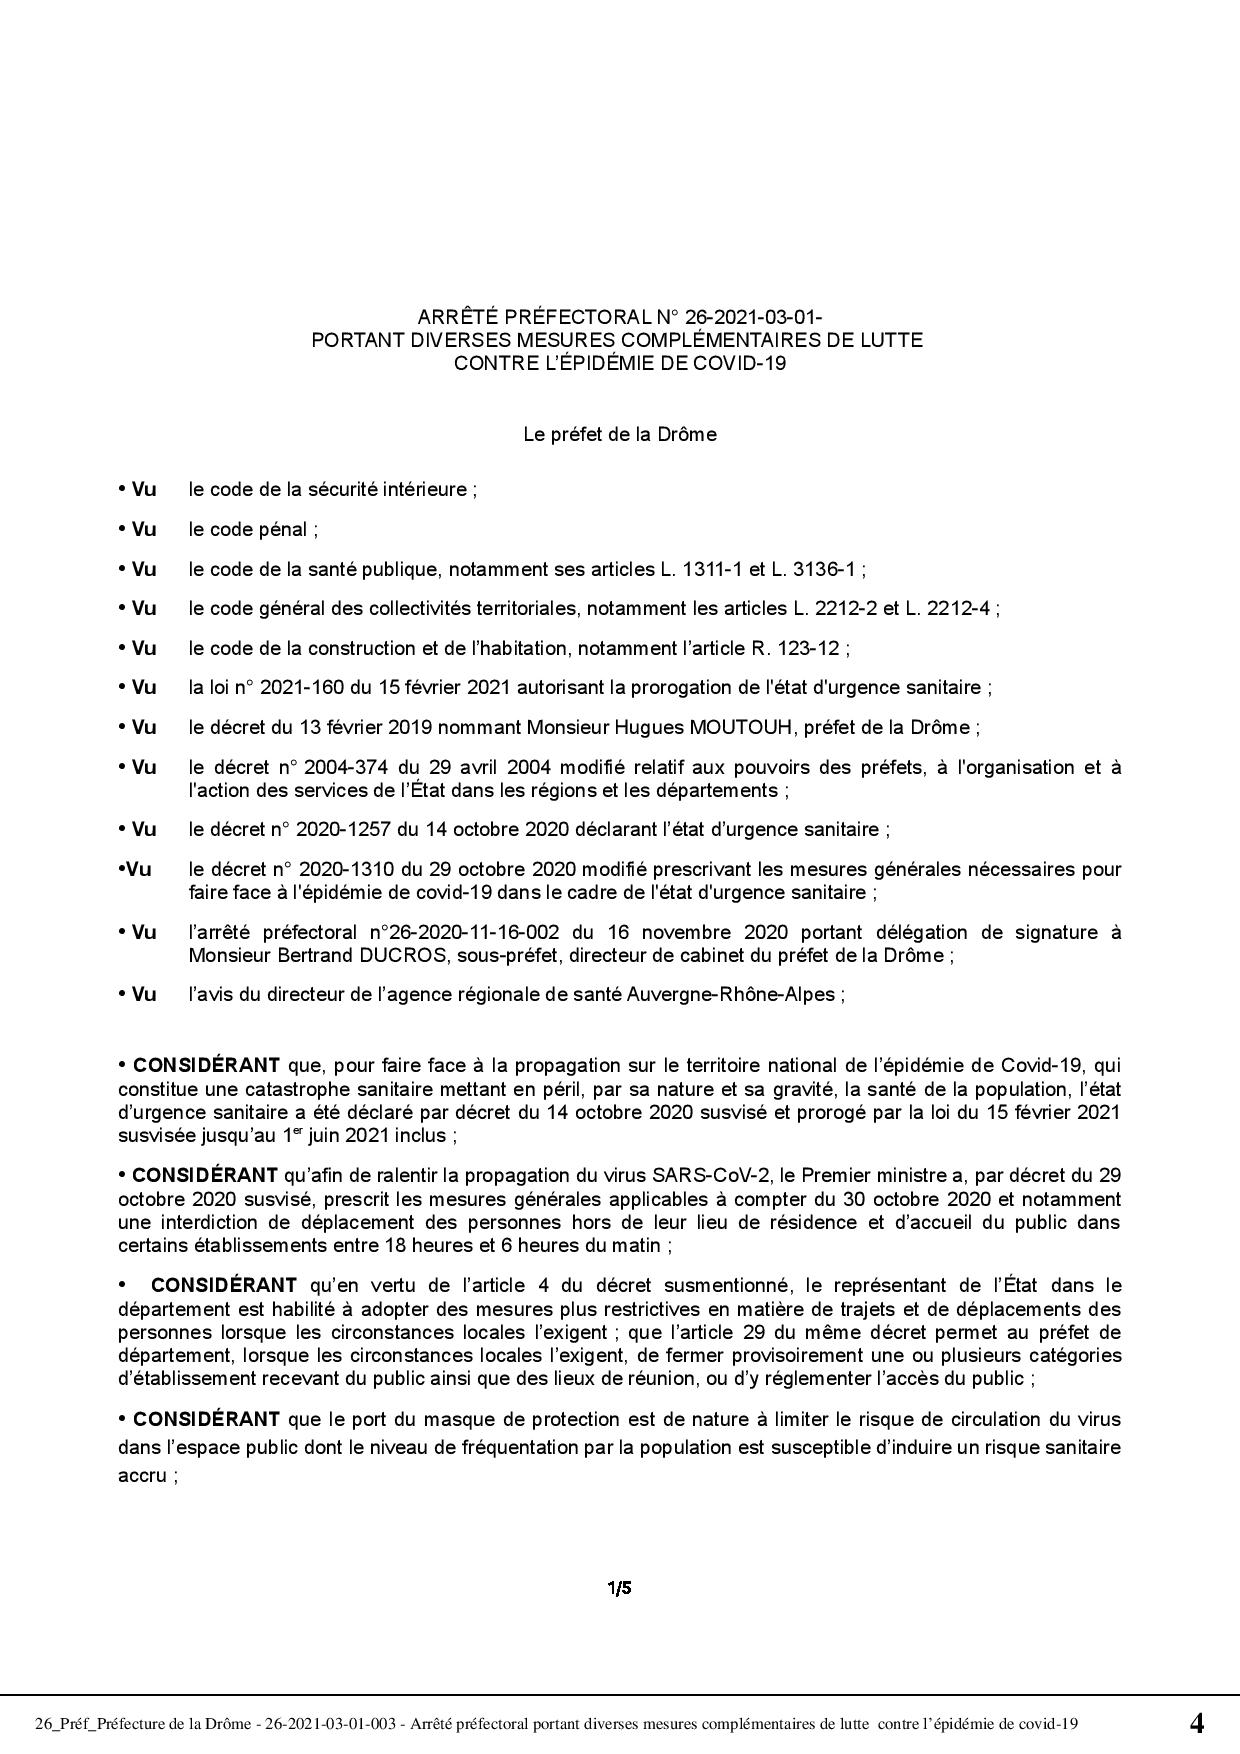 recueil-26-2021-043-recueil-des-actes-administratifs-special_1_-2-page-004.jpg